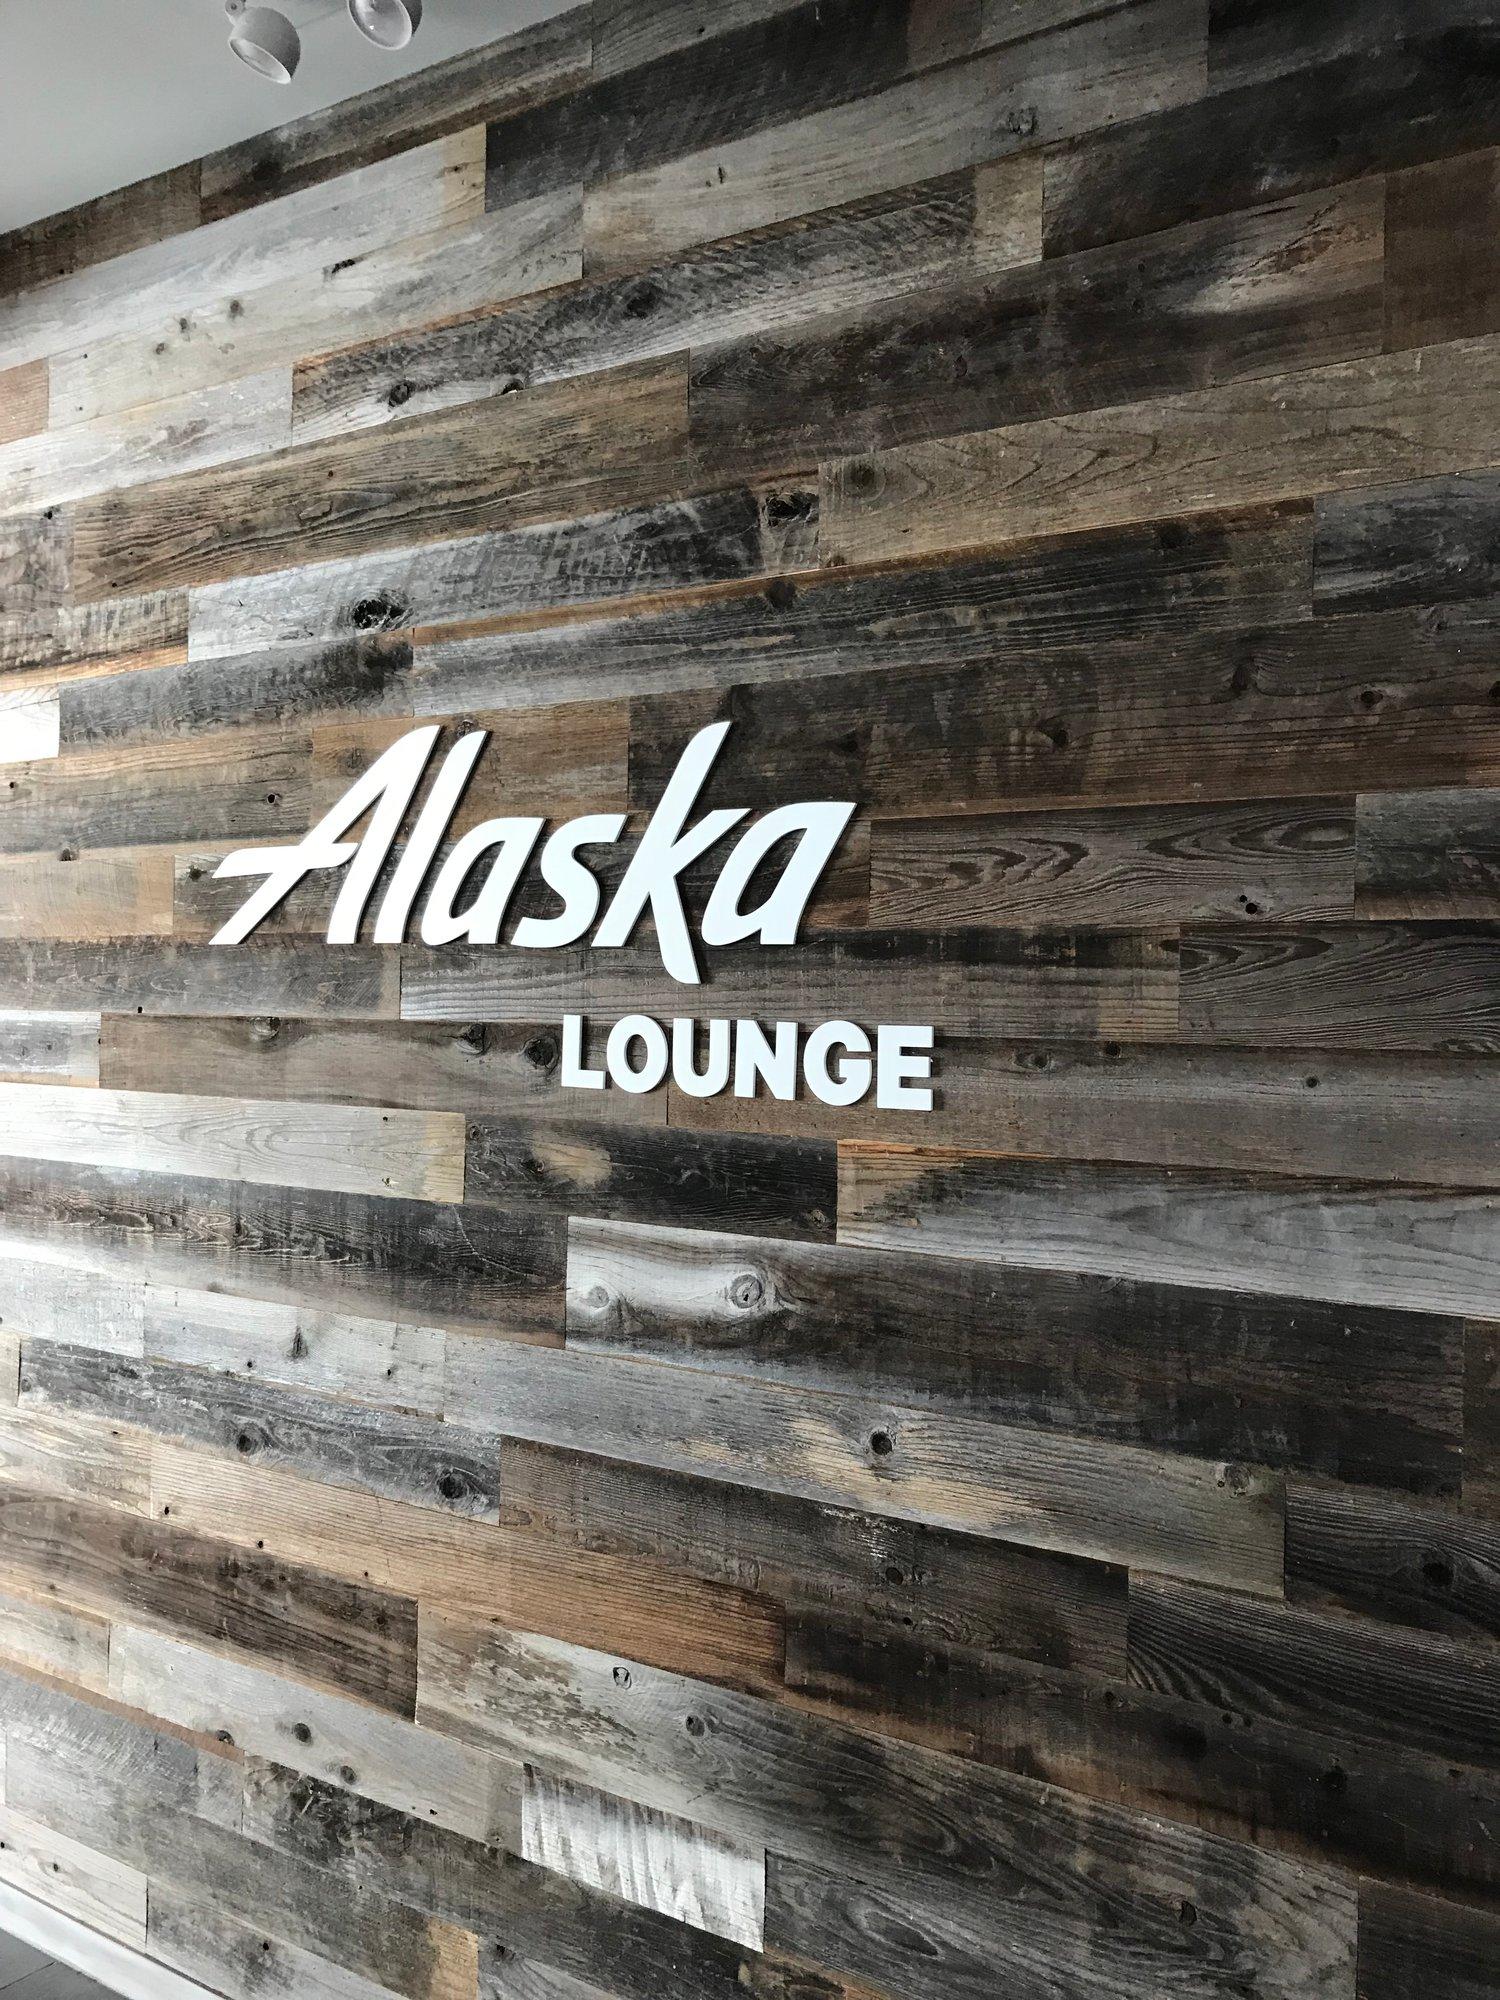 Alaska Airlines Alaska Lounge image 29 of 33